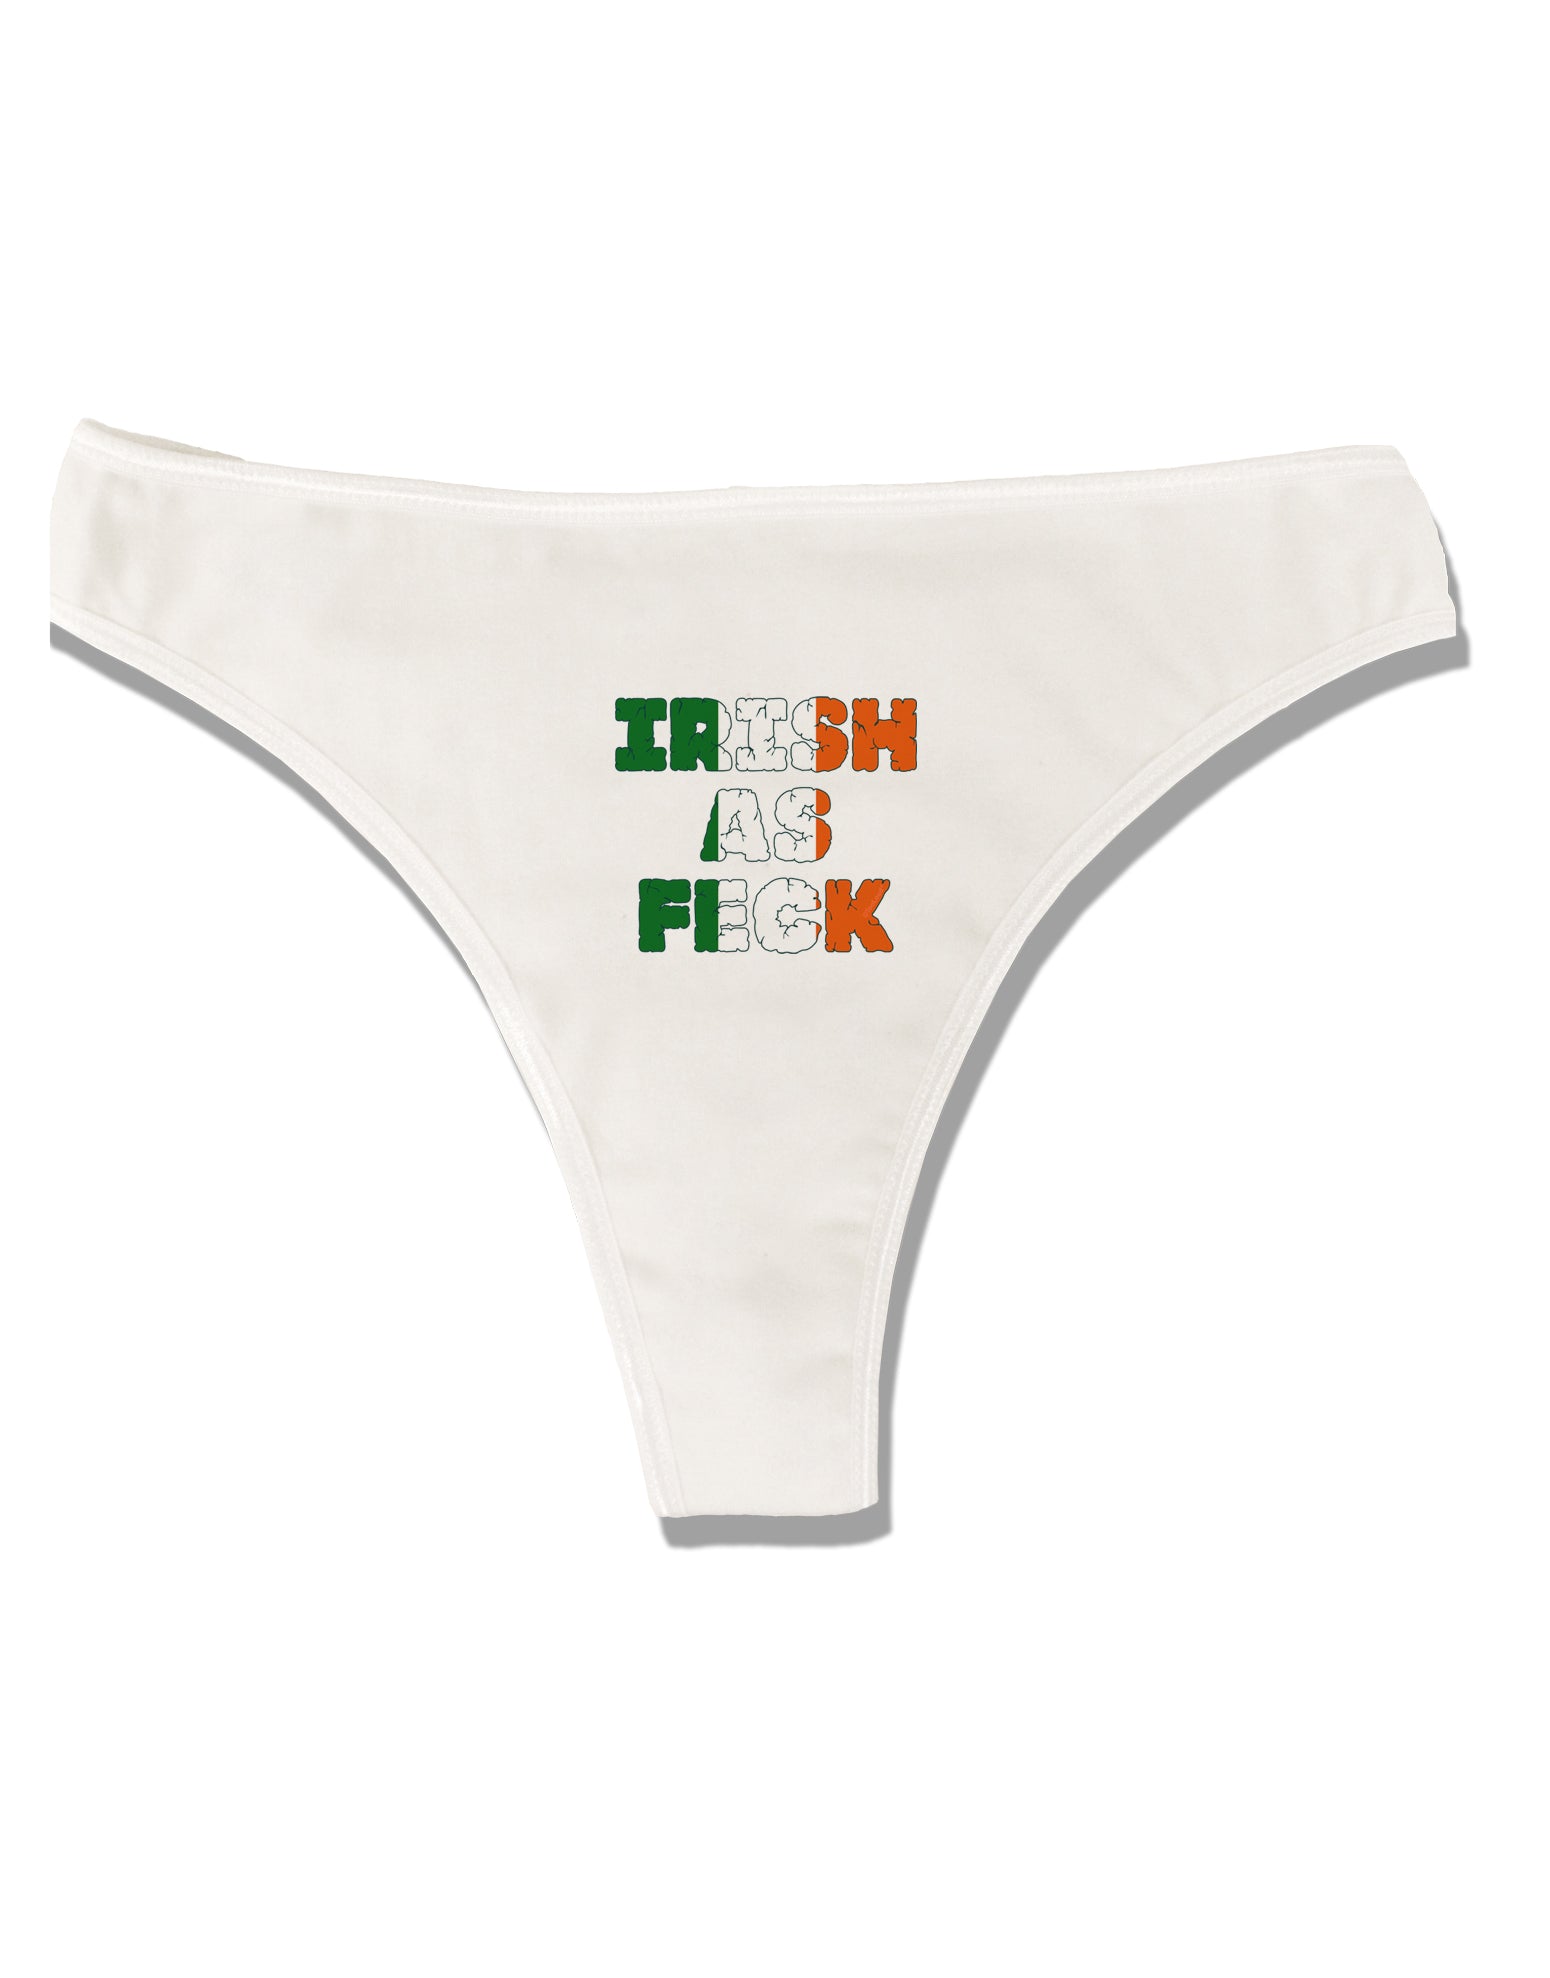 Buy Funny Underwear for Women Funny Womens Underwear Funny Panties